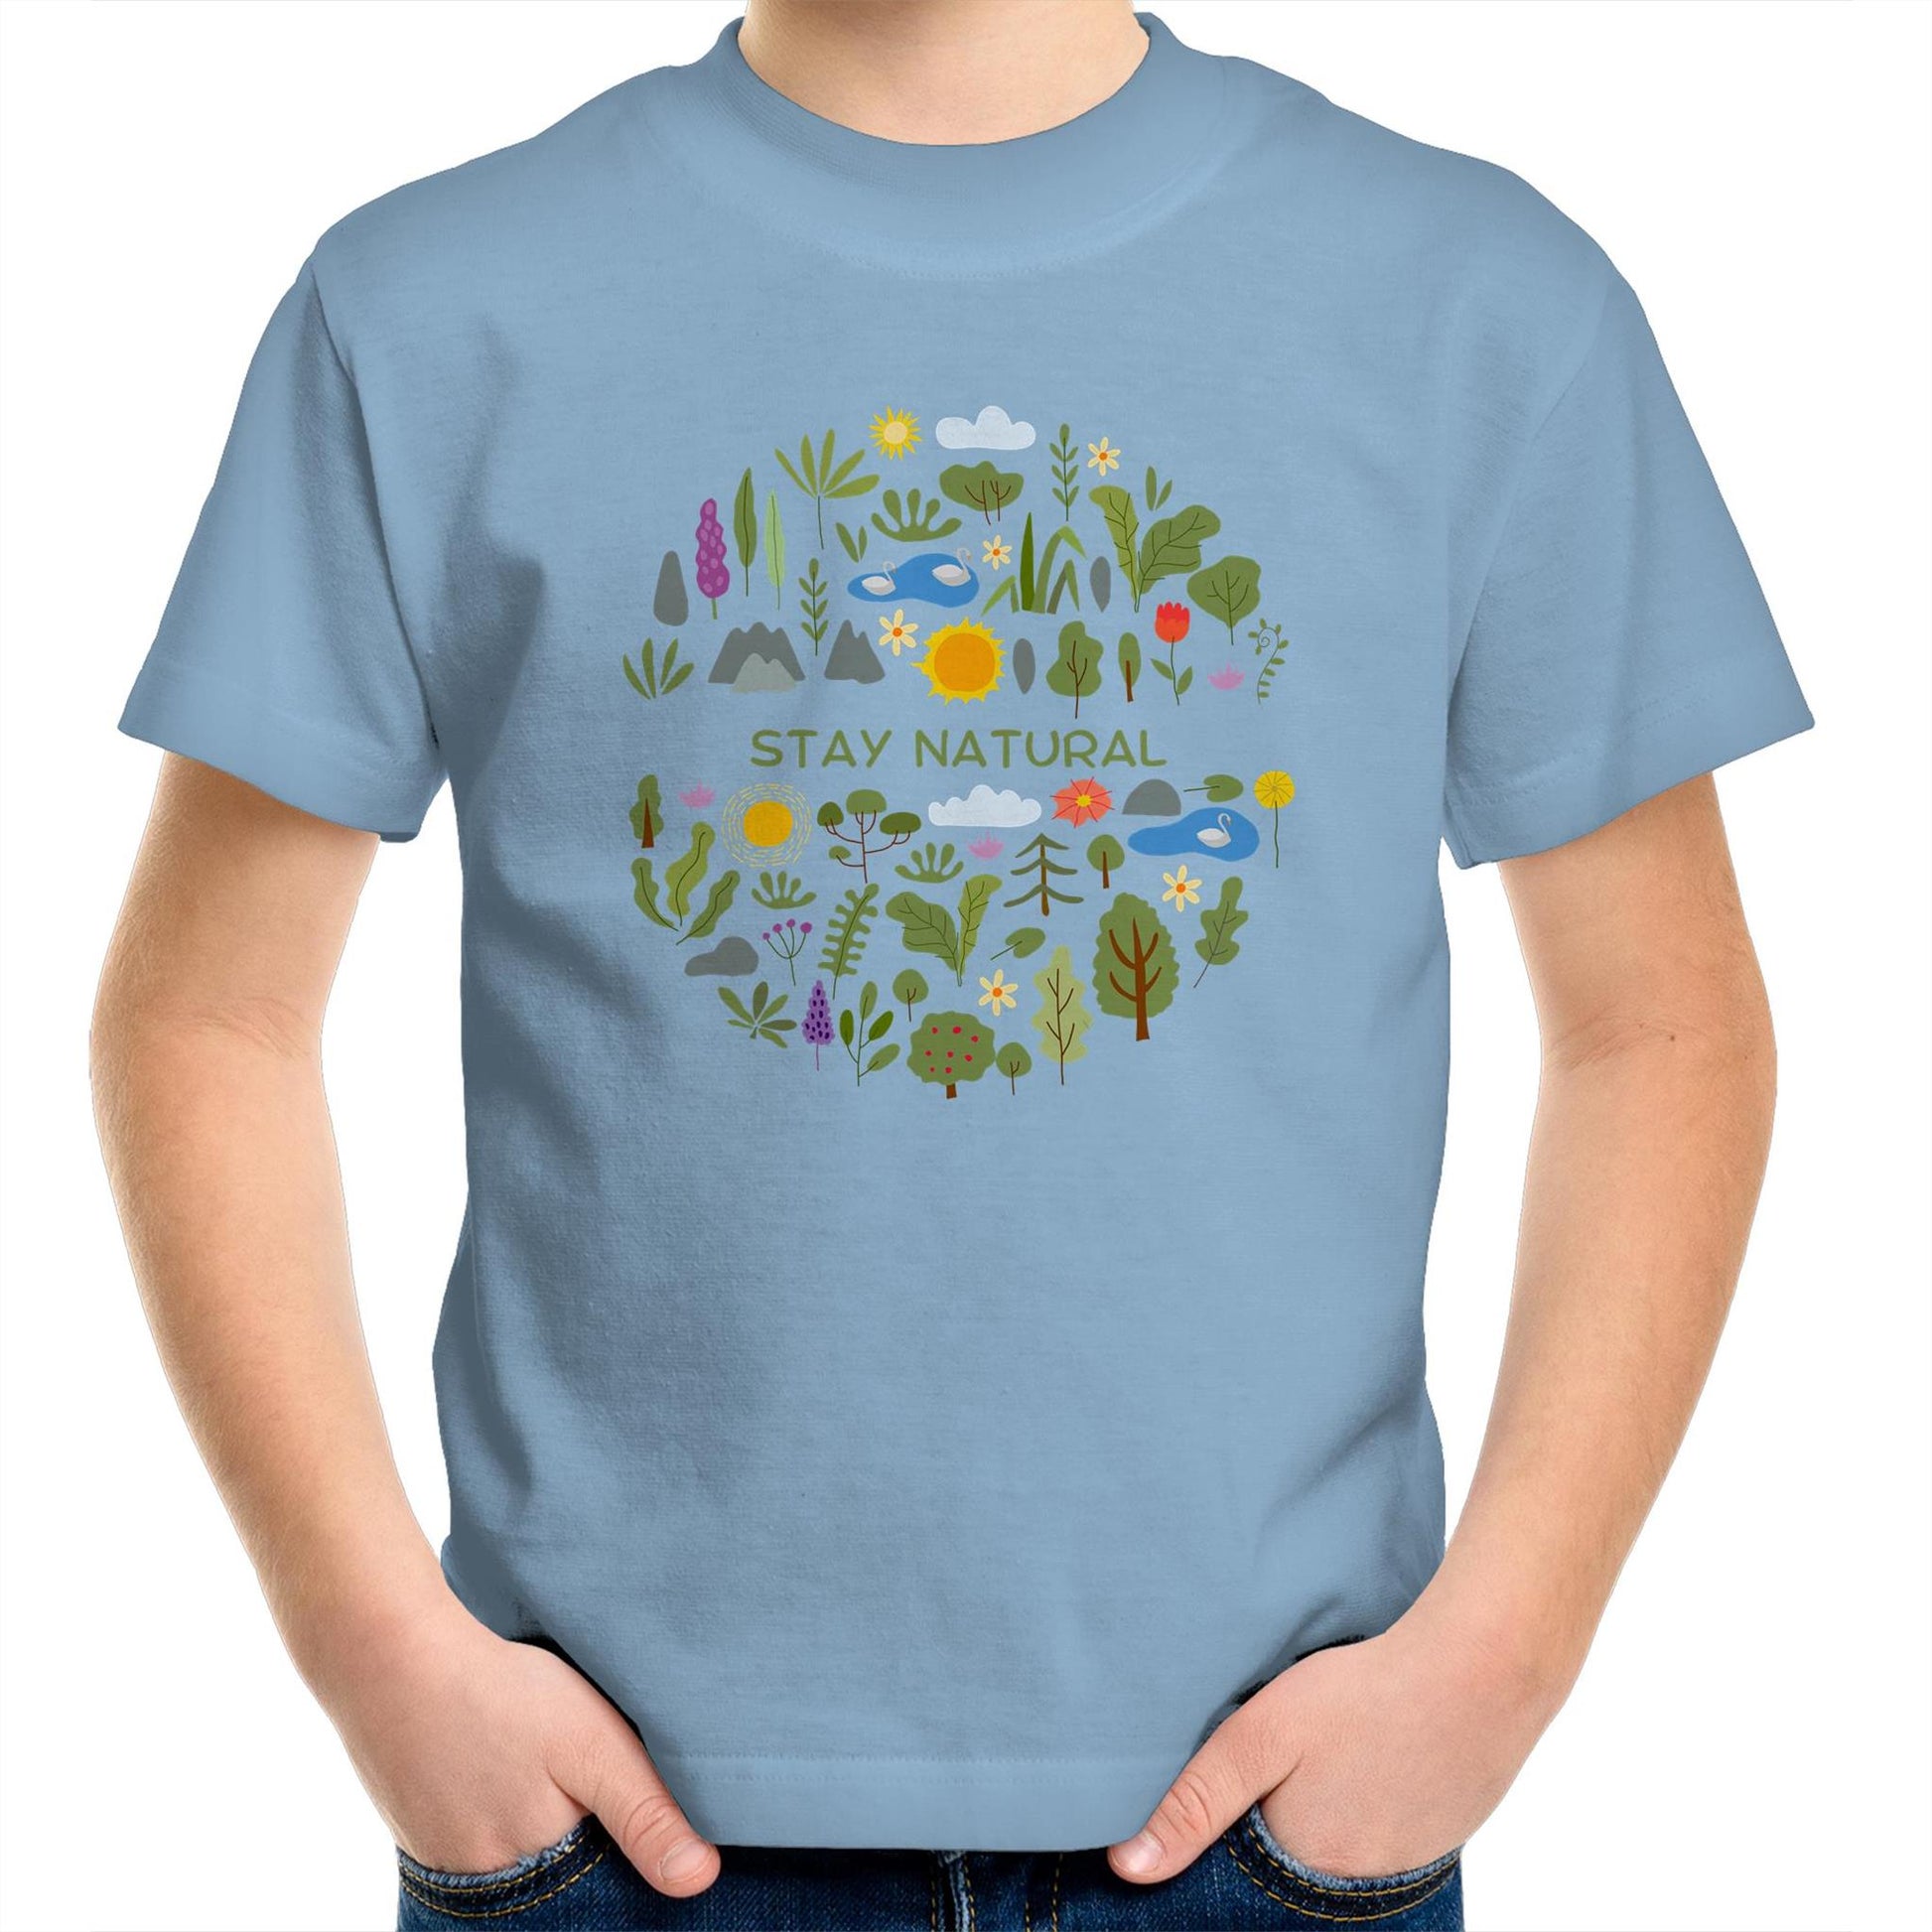 Stay Natural - Kids Youth Crew T-Shirt Carolina Blue Kids Youth T-shirt Environment Plants